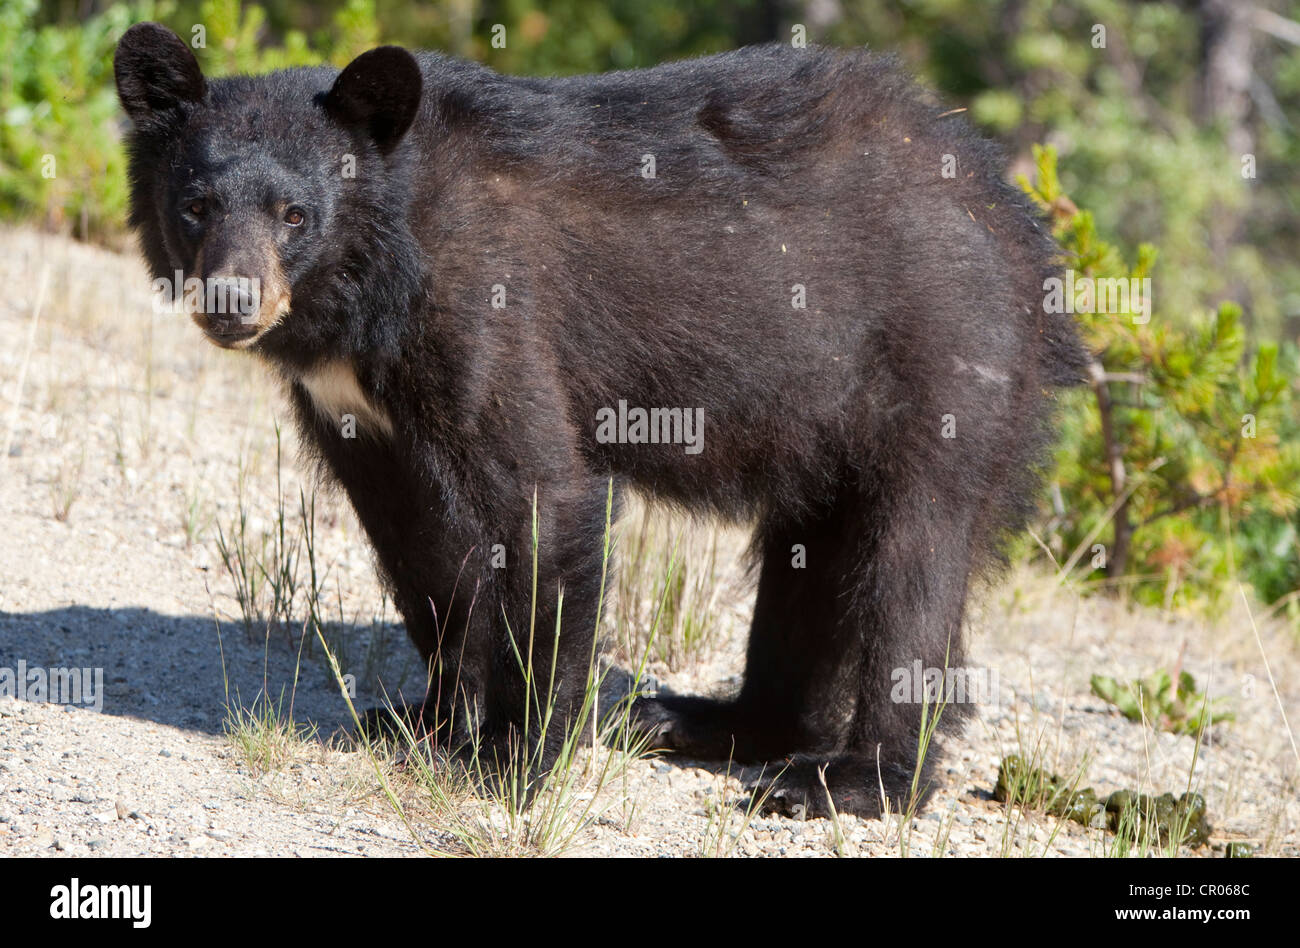 Black Bear (Ursus americanus), giovane, cub con scat freschi, Yukon Territory, Canada Foto Stock